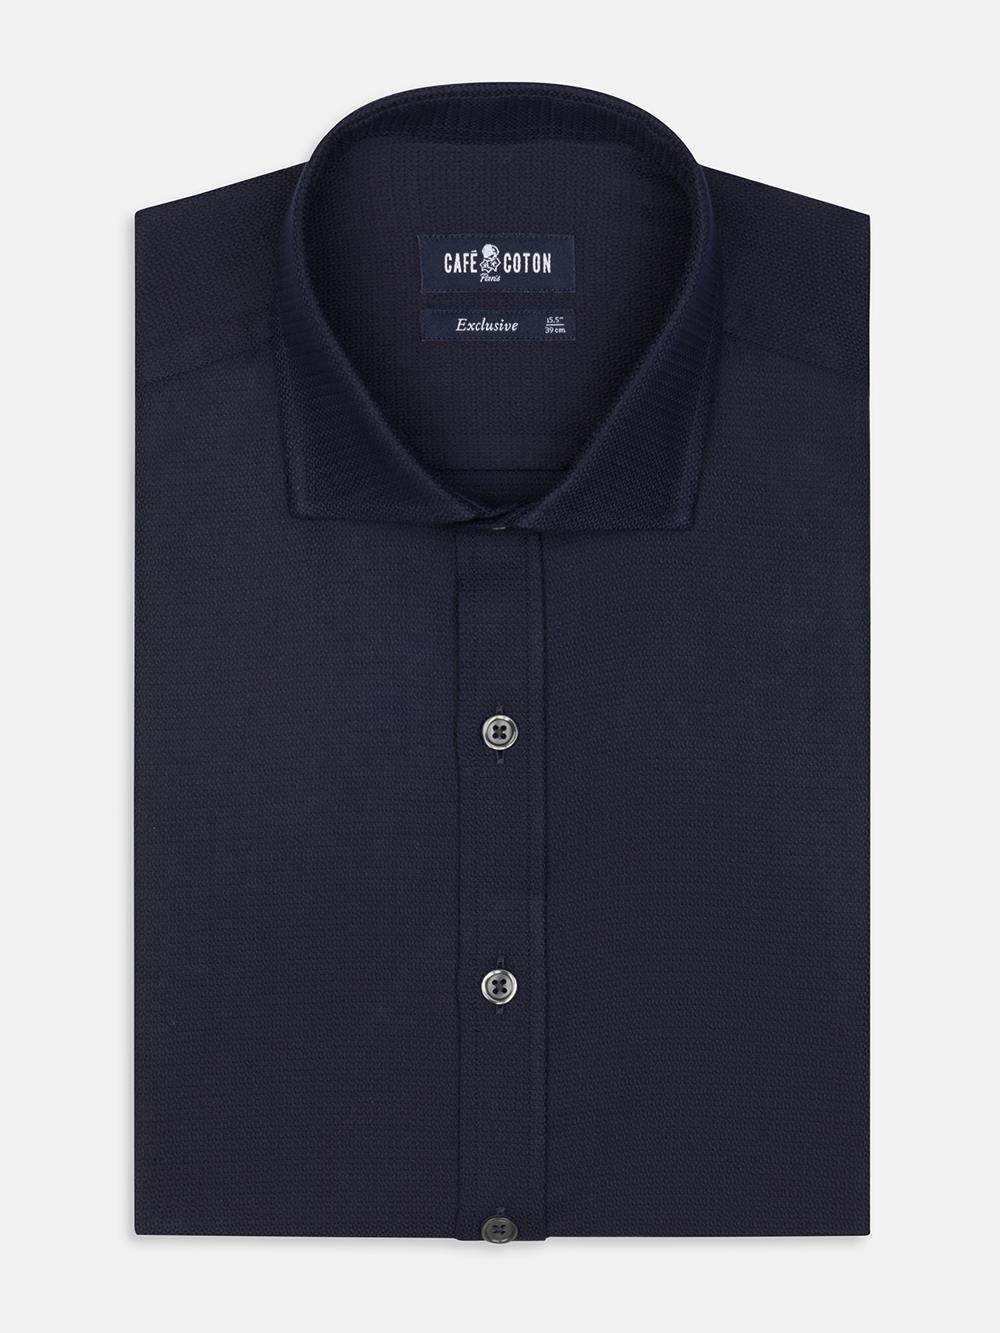 Camisa Horace navy texturizada